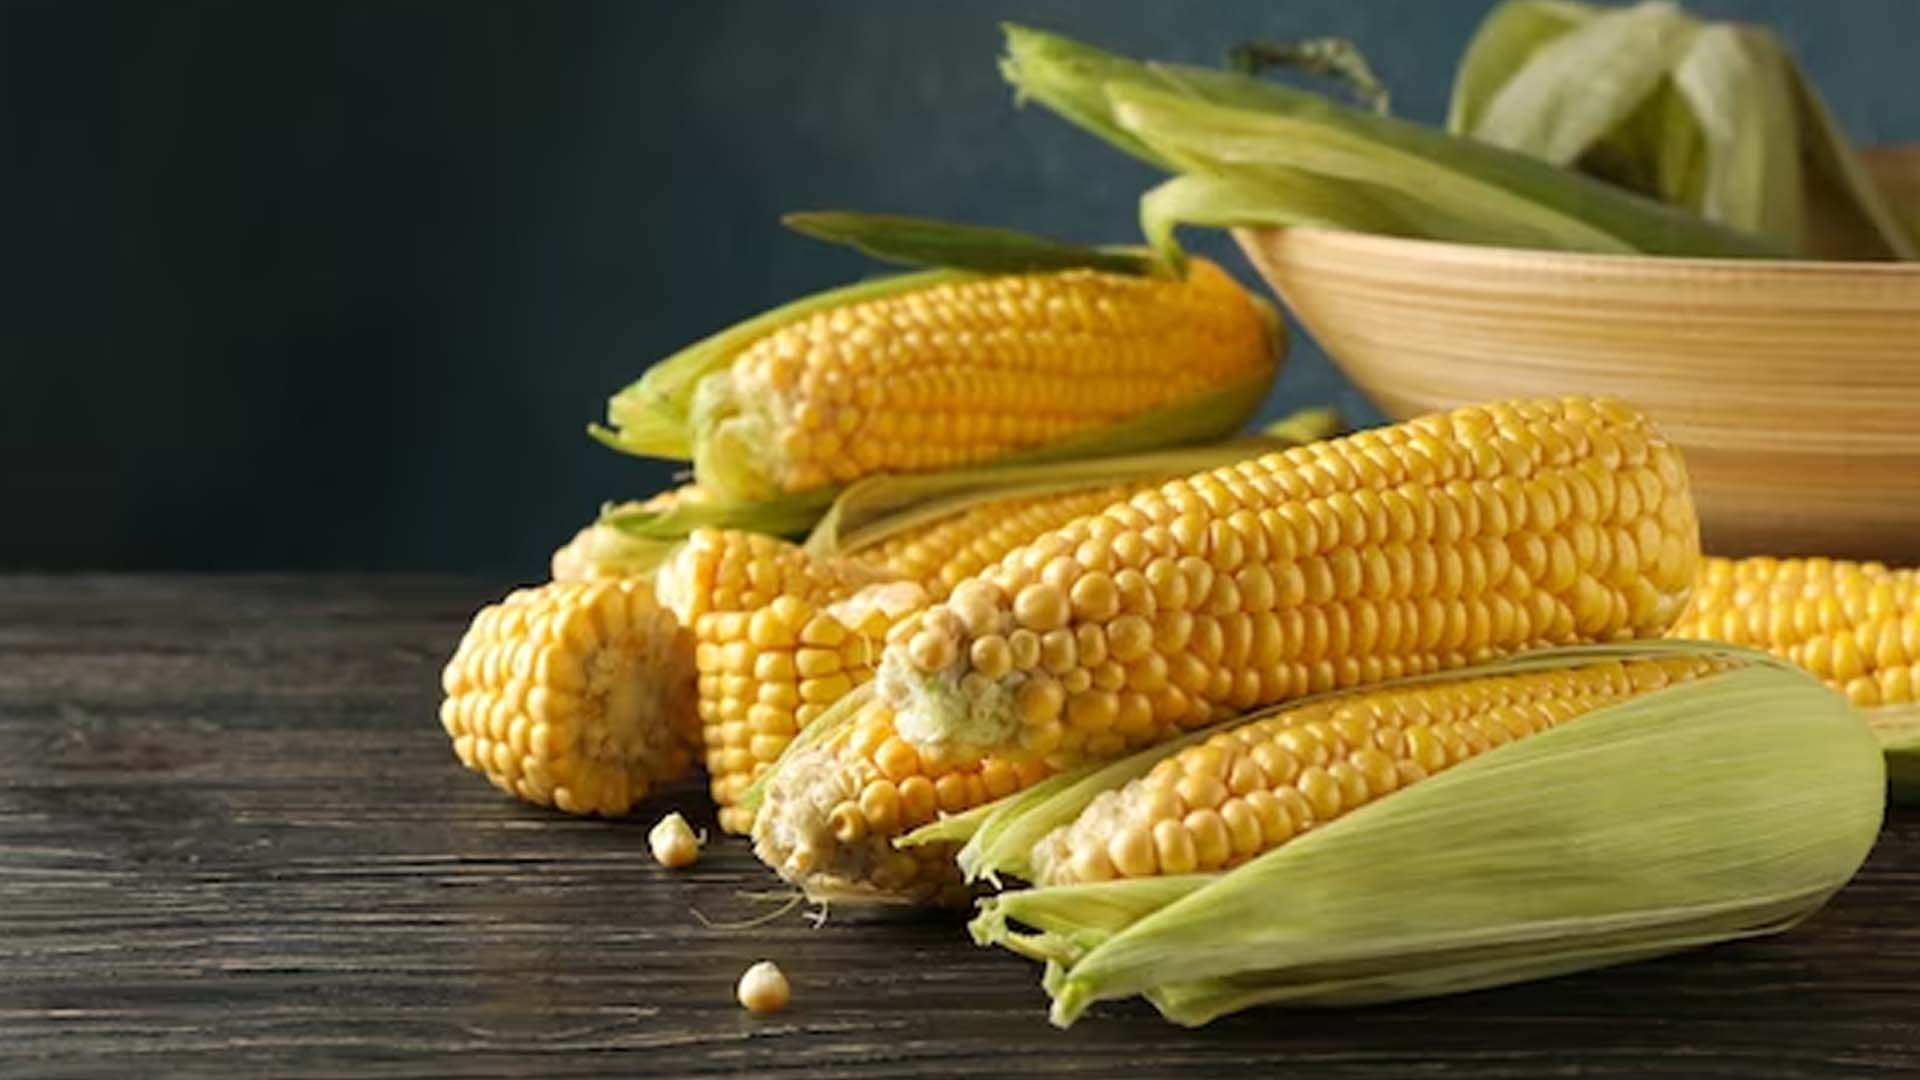 Health Benefits of Corn